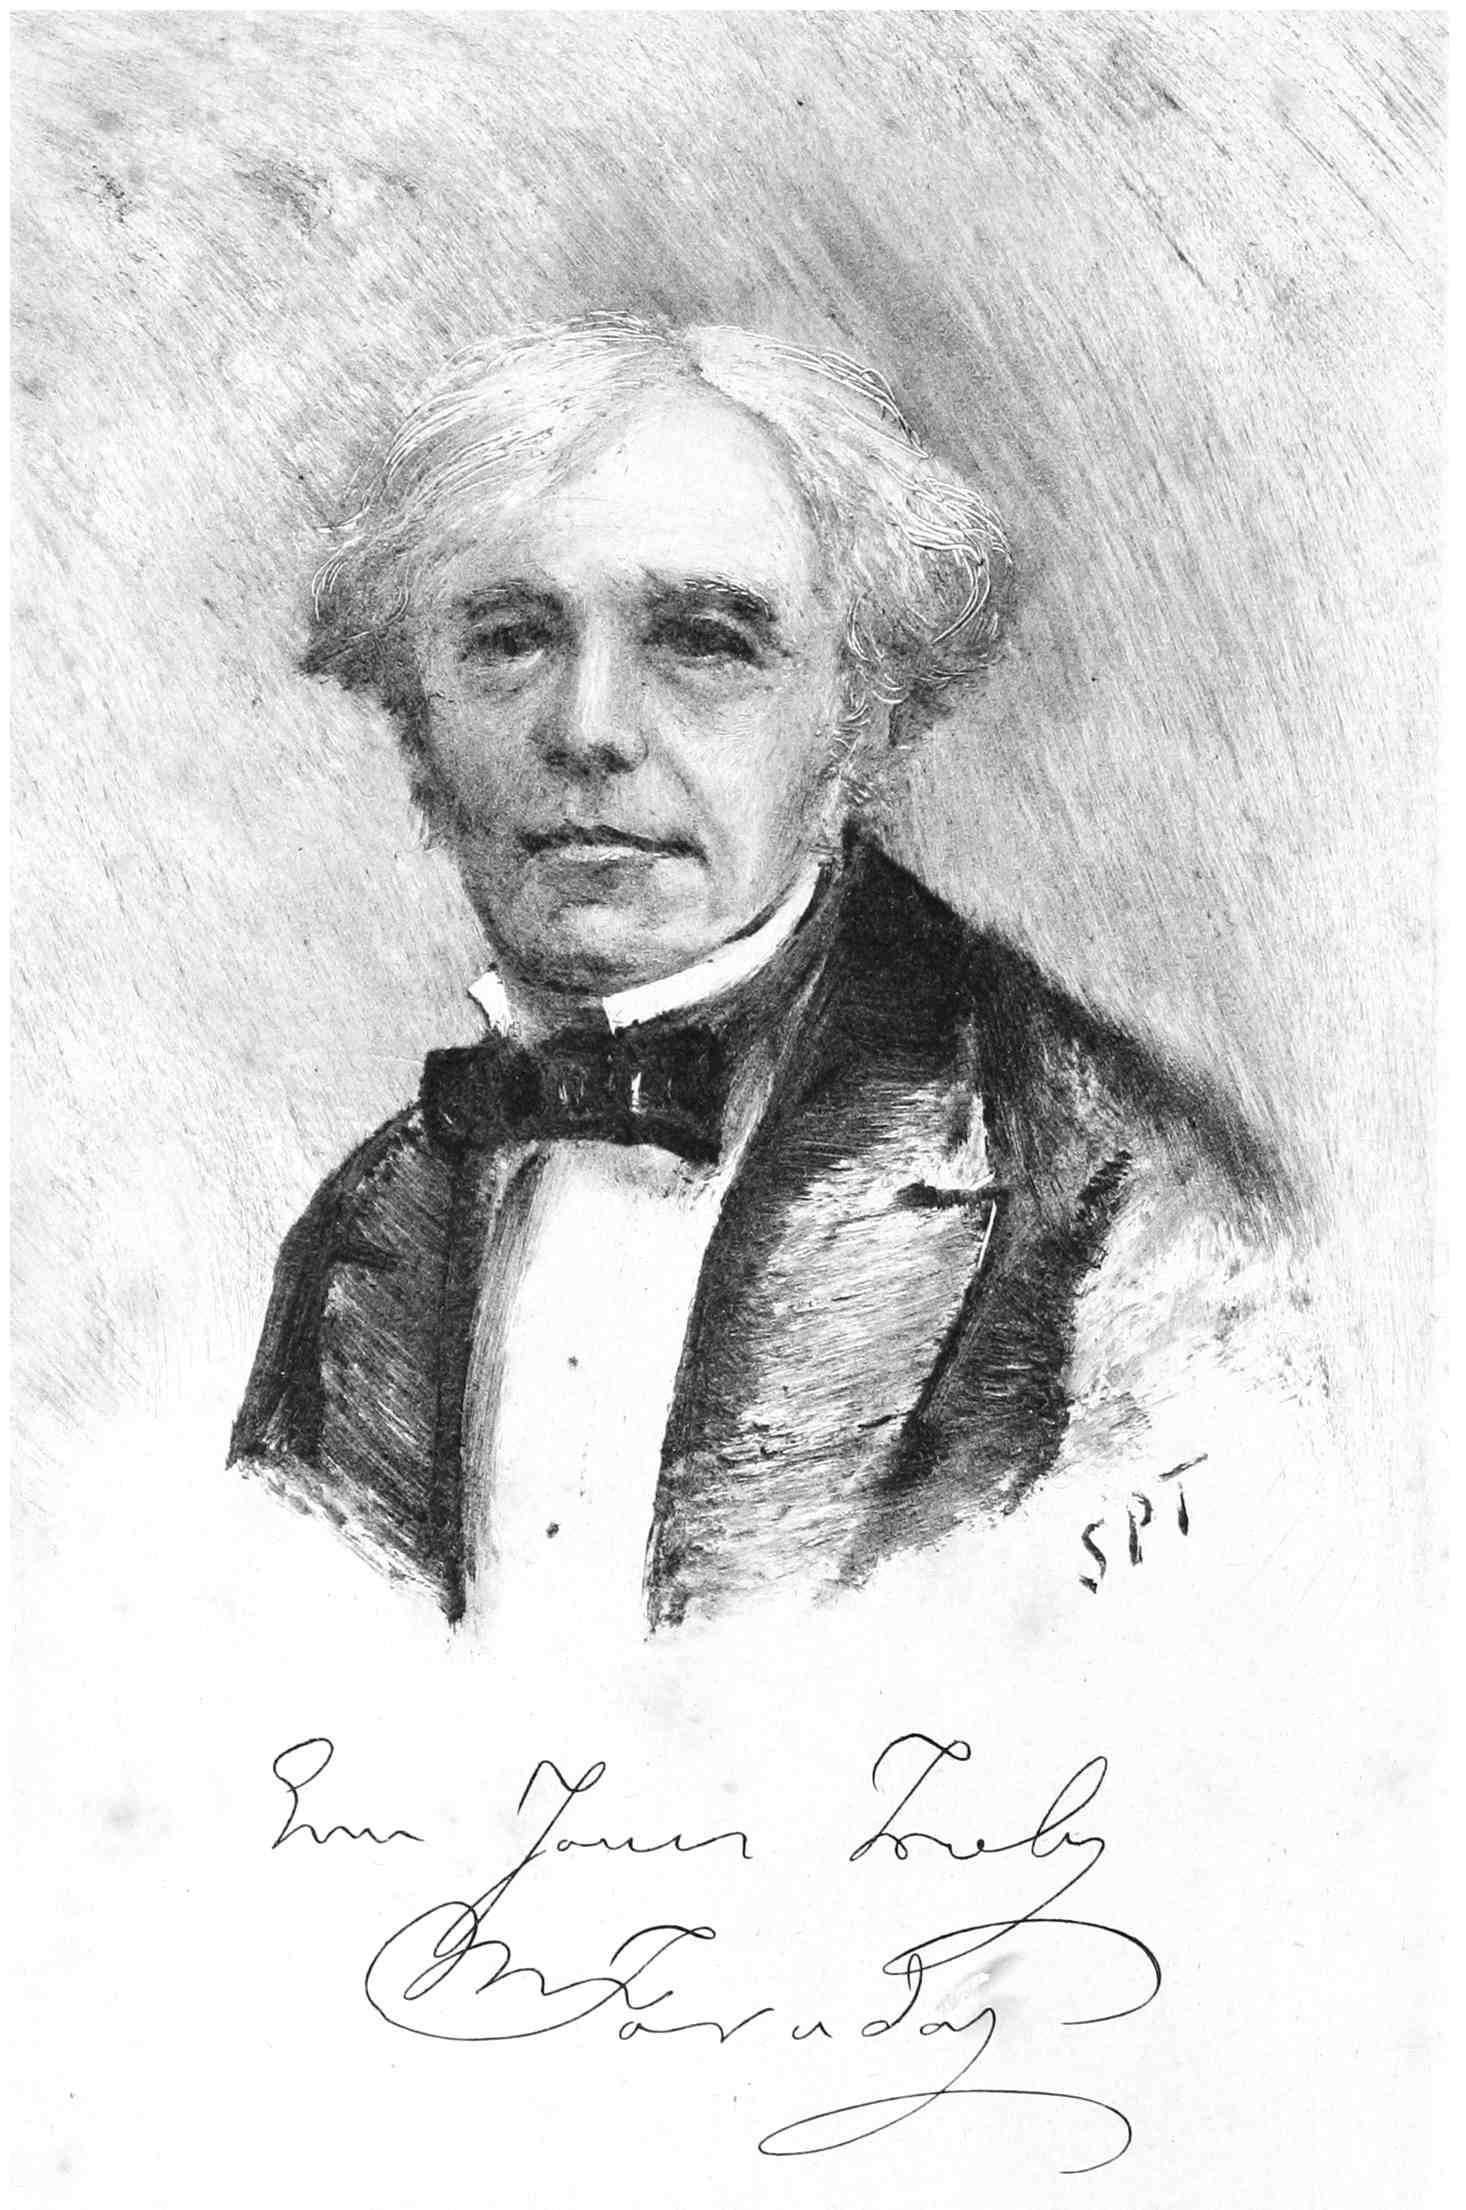 Michael Faraday (1791 - 1867) - Biography - MacTutor History of Mathematics